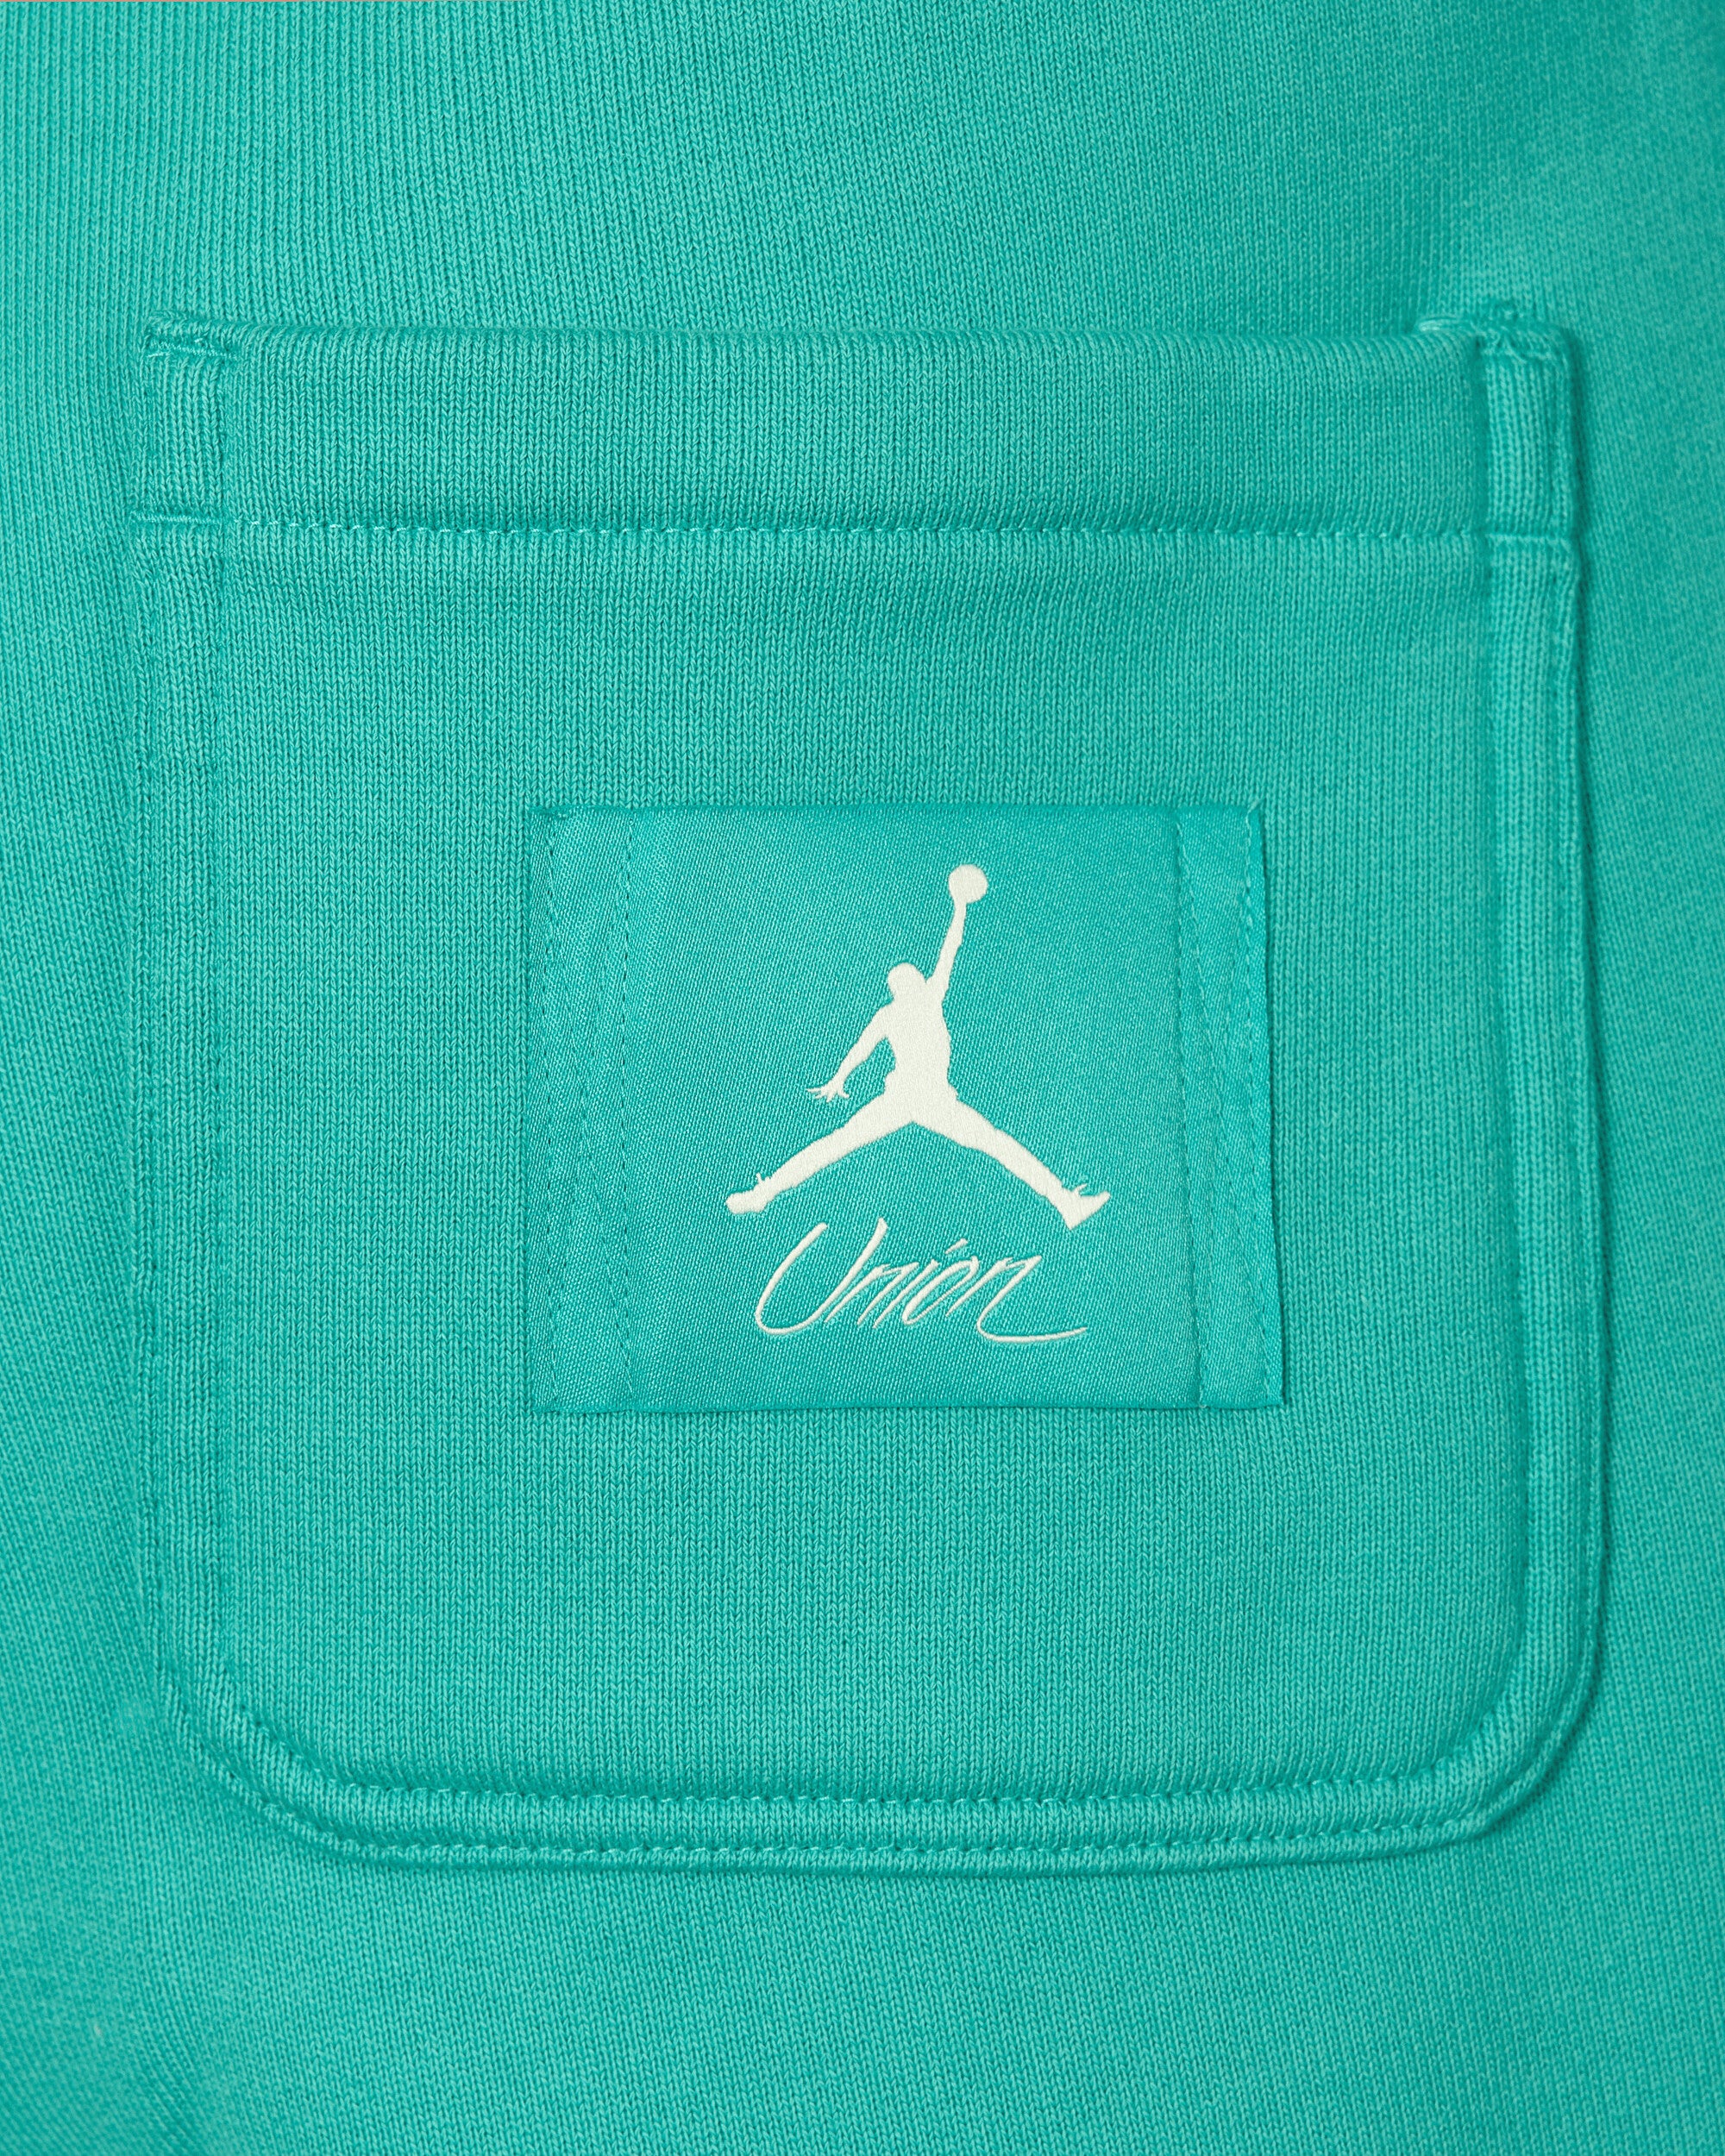 Nike Jordan UNION Fleece Pants Green - Slam Jam Official Store